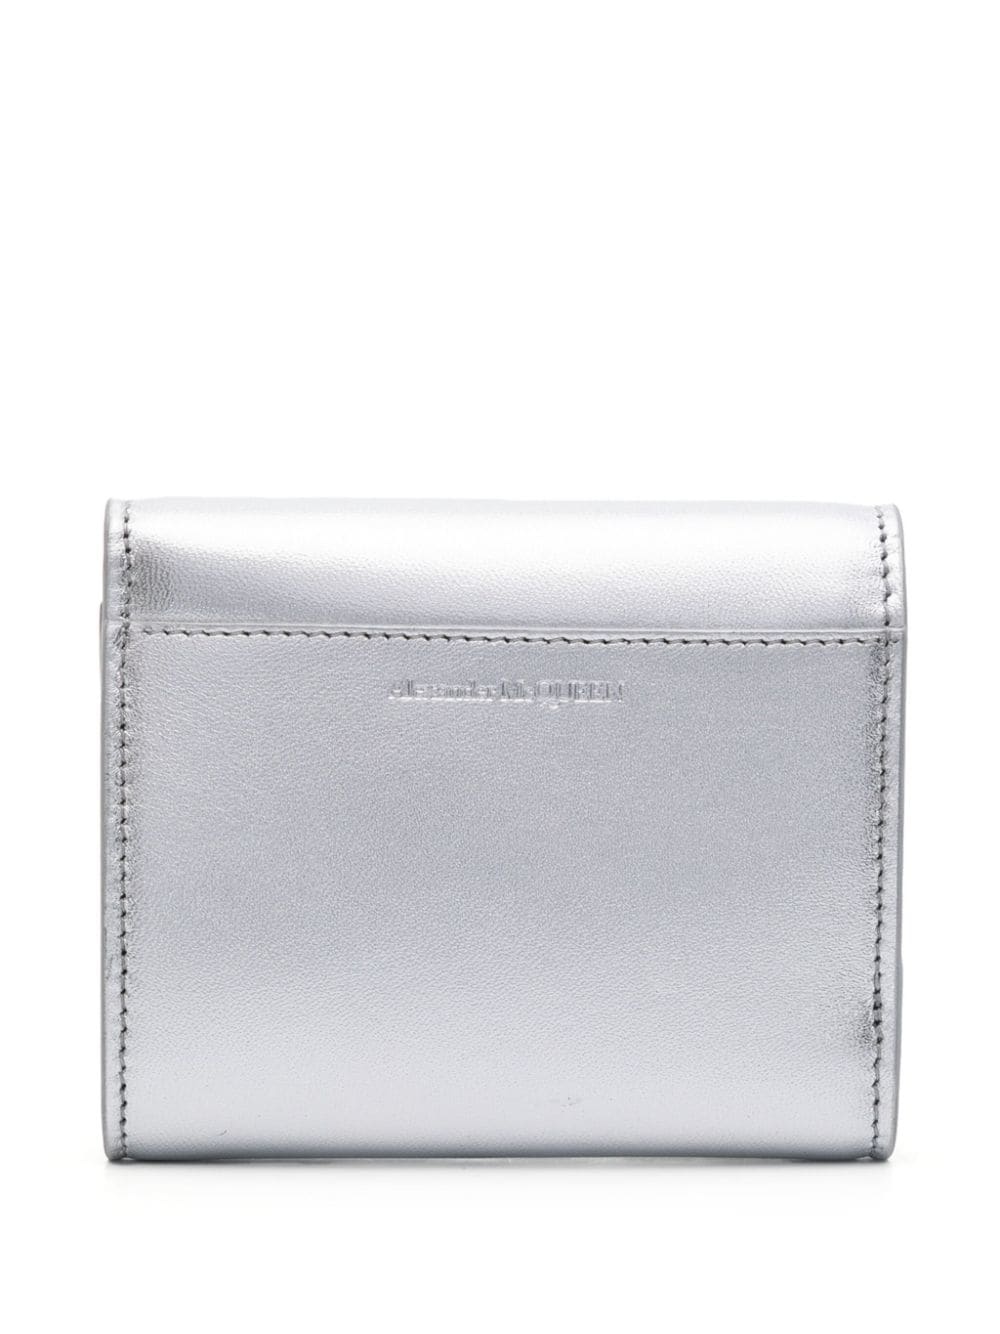 tri-fold metallic leather wallet - 2